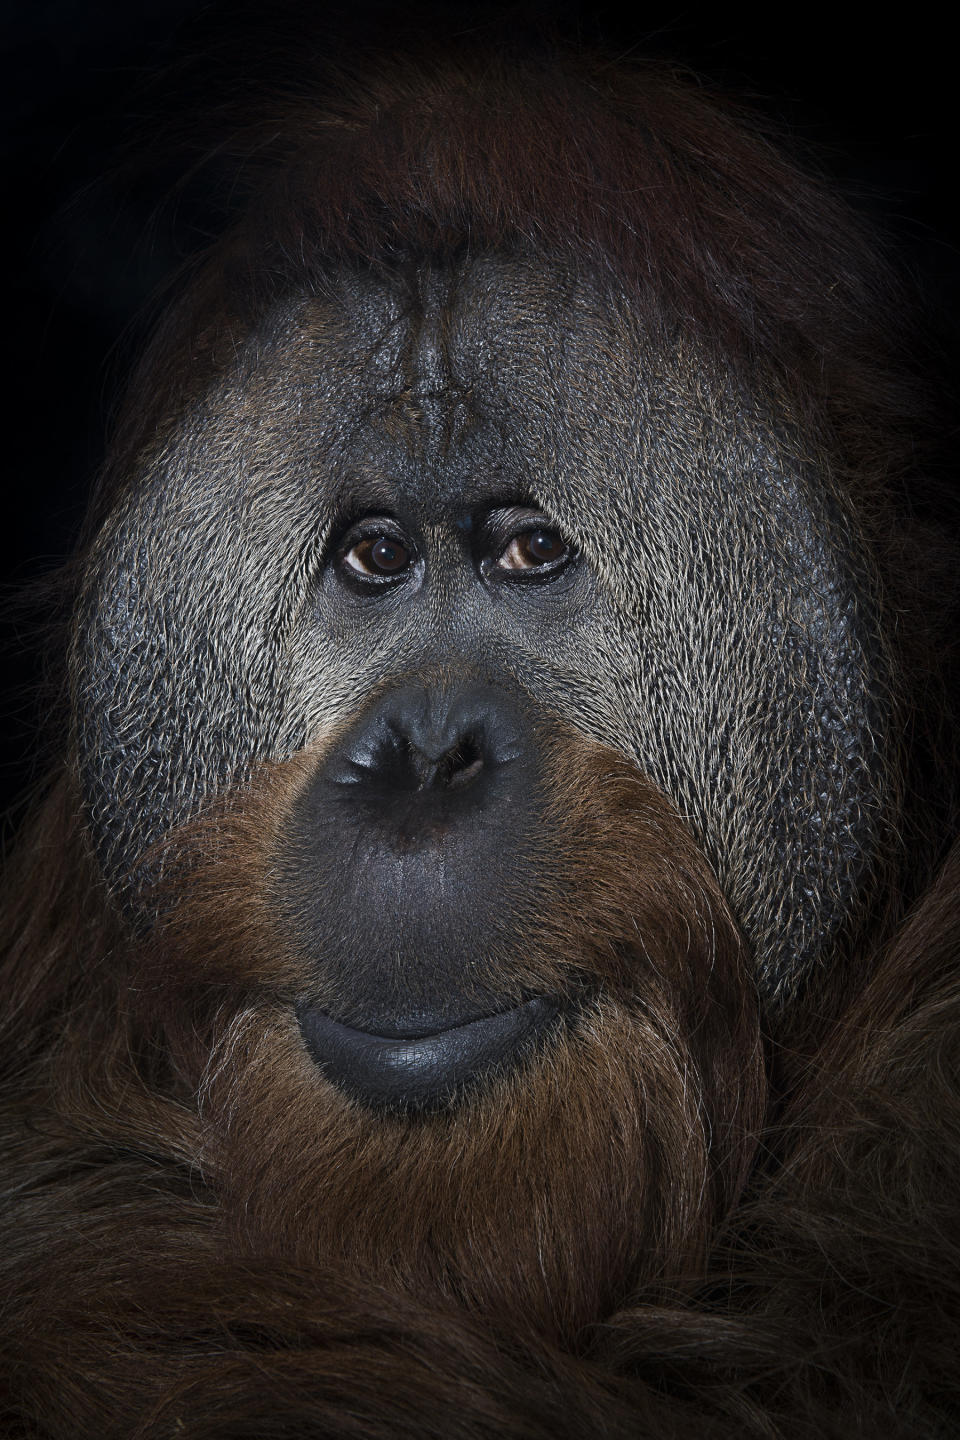 A 40-year-old orangutan named Azy at the Simon Skjodt International Orangutan Center in Indianapolis, Indiana.